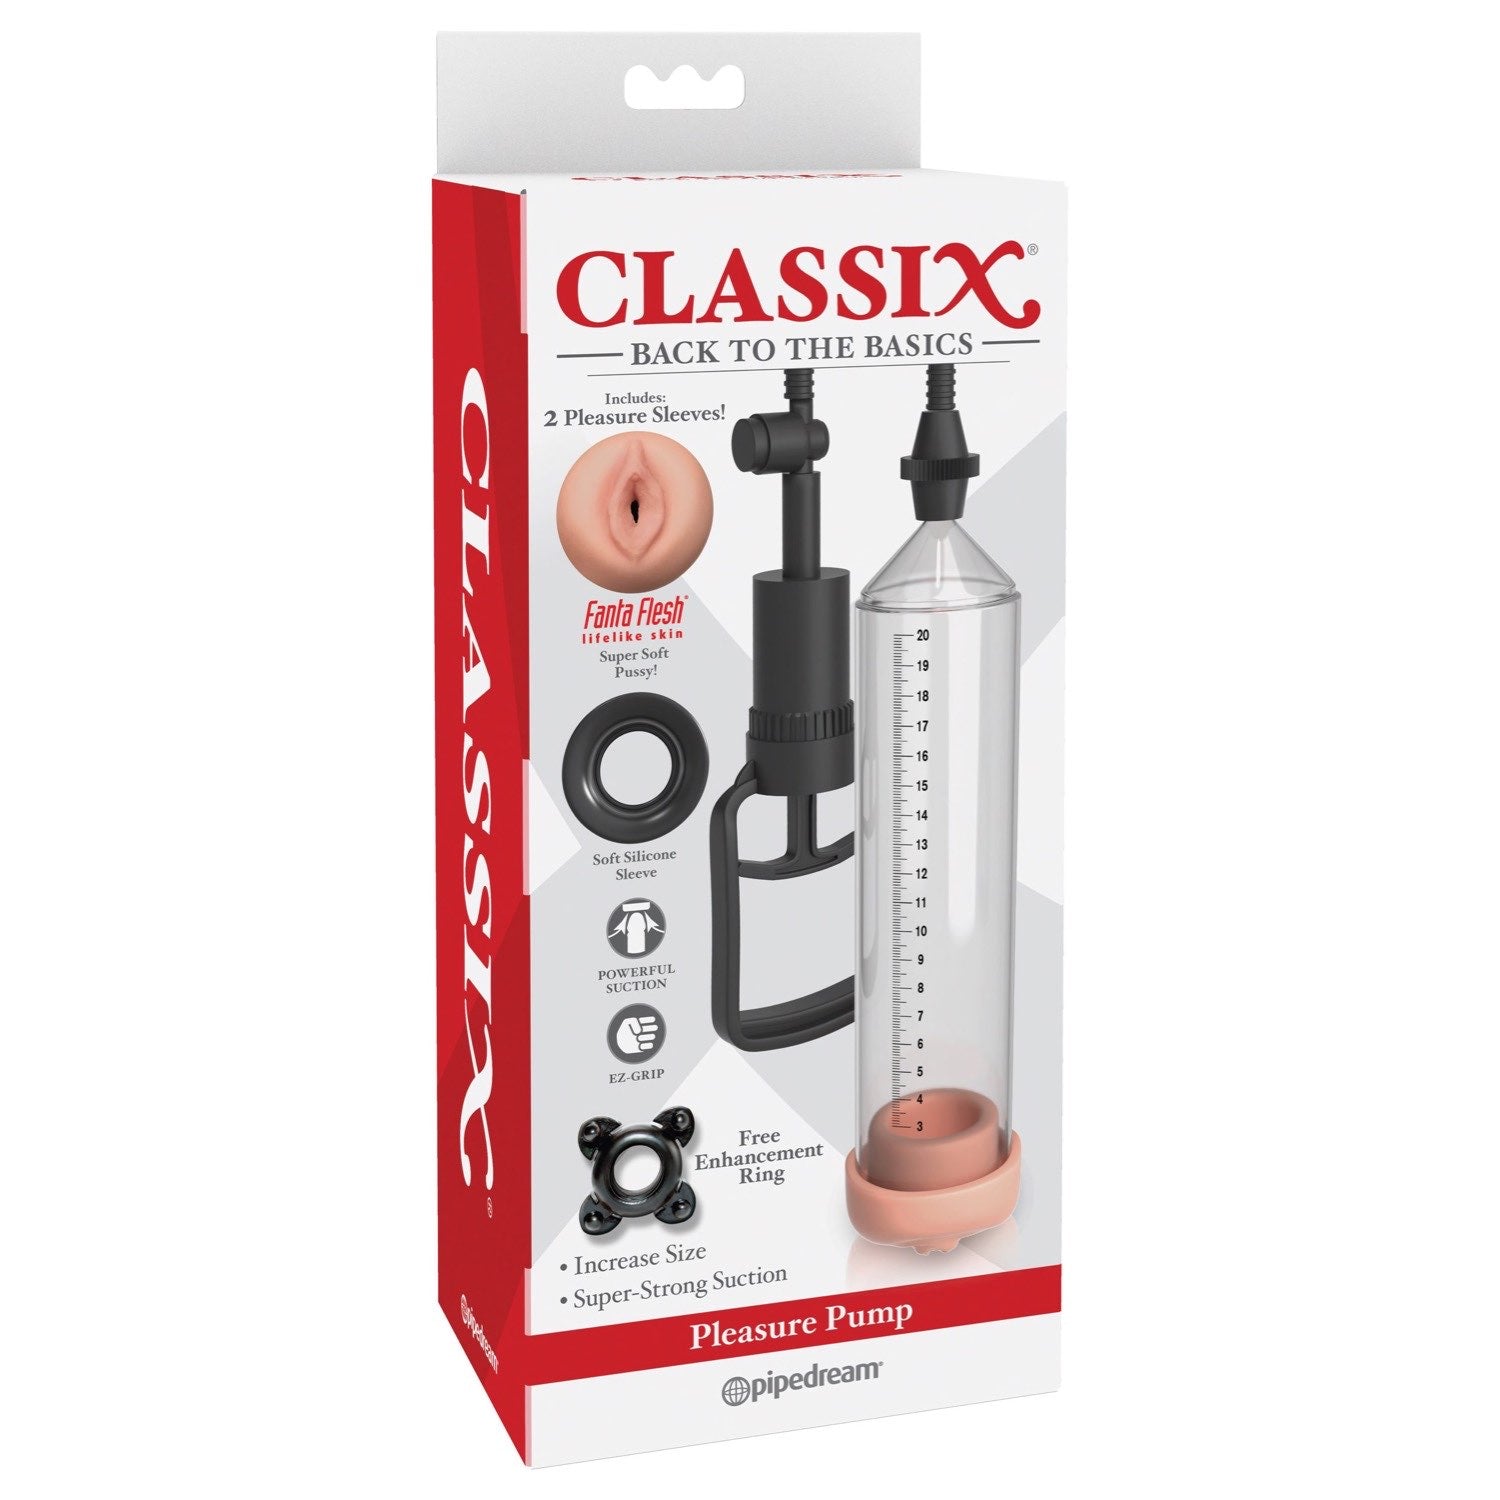 Classix Pleasure Pump - Clear Penis Pump by Pipedream